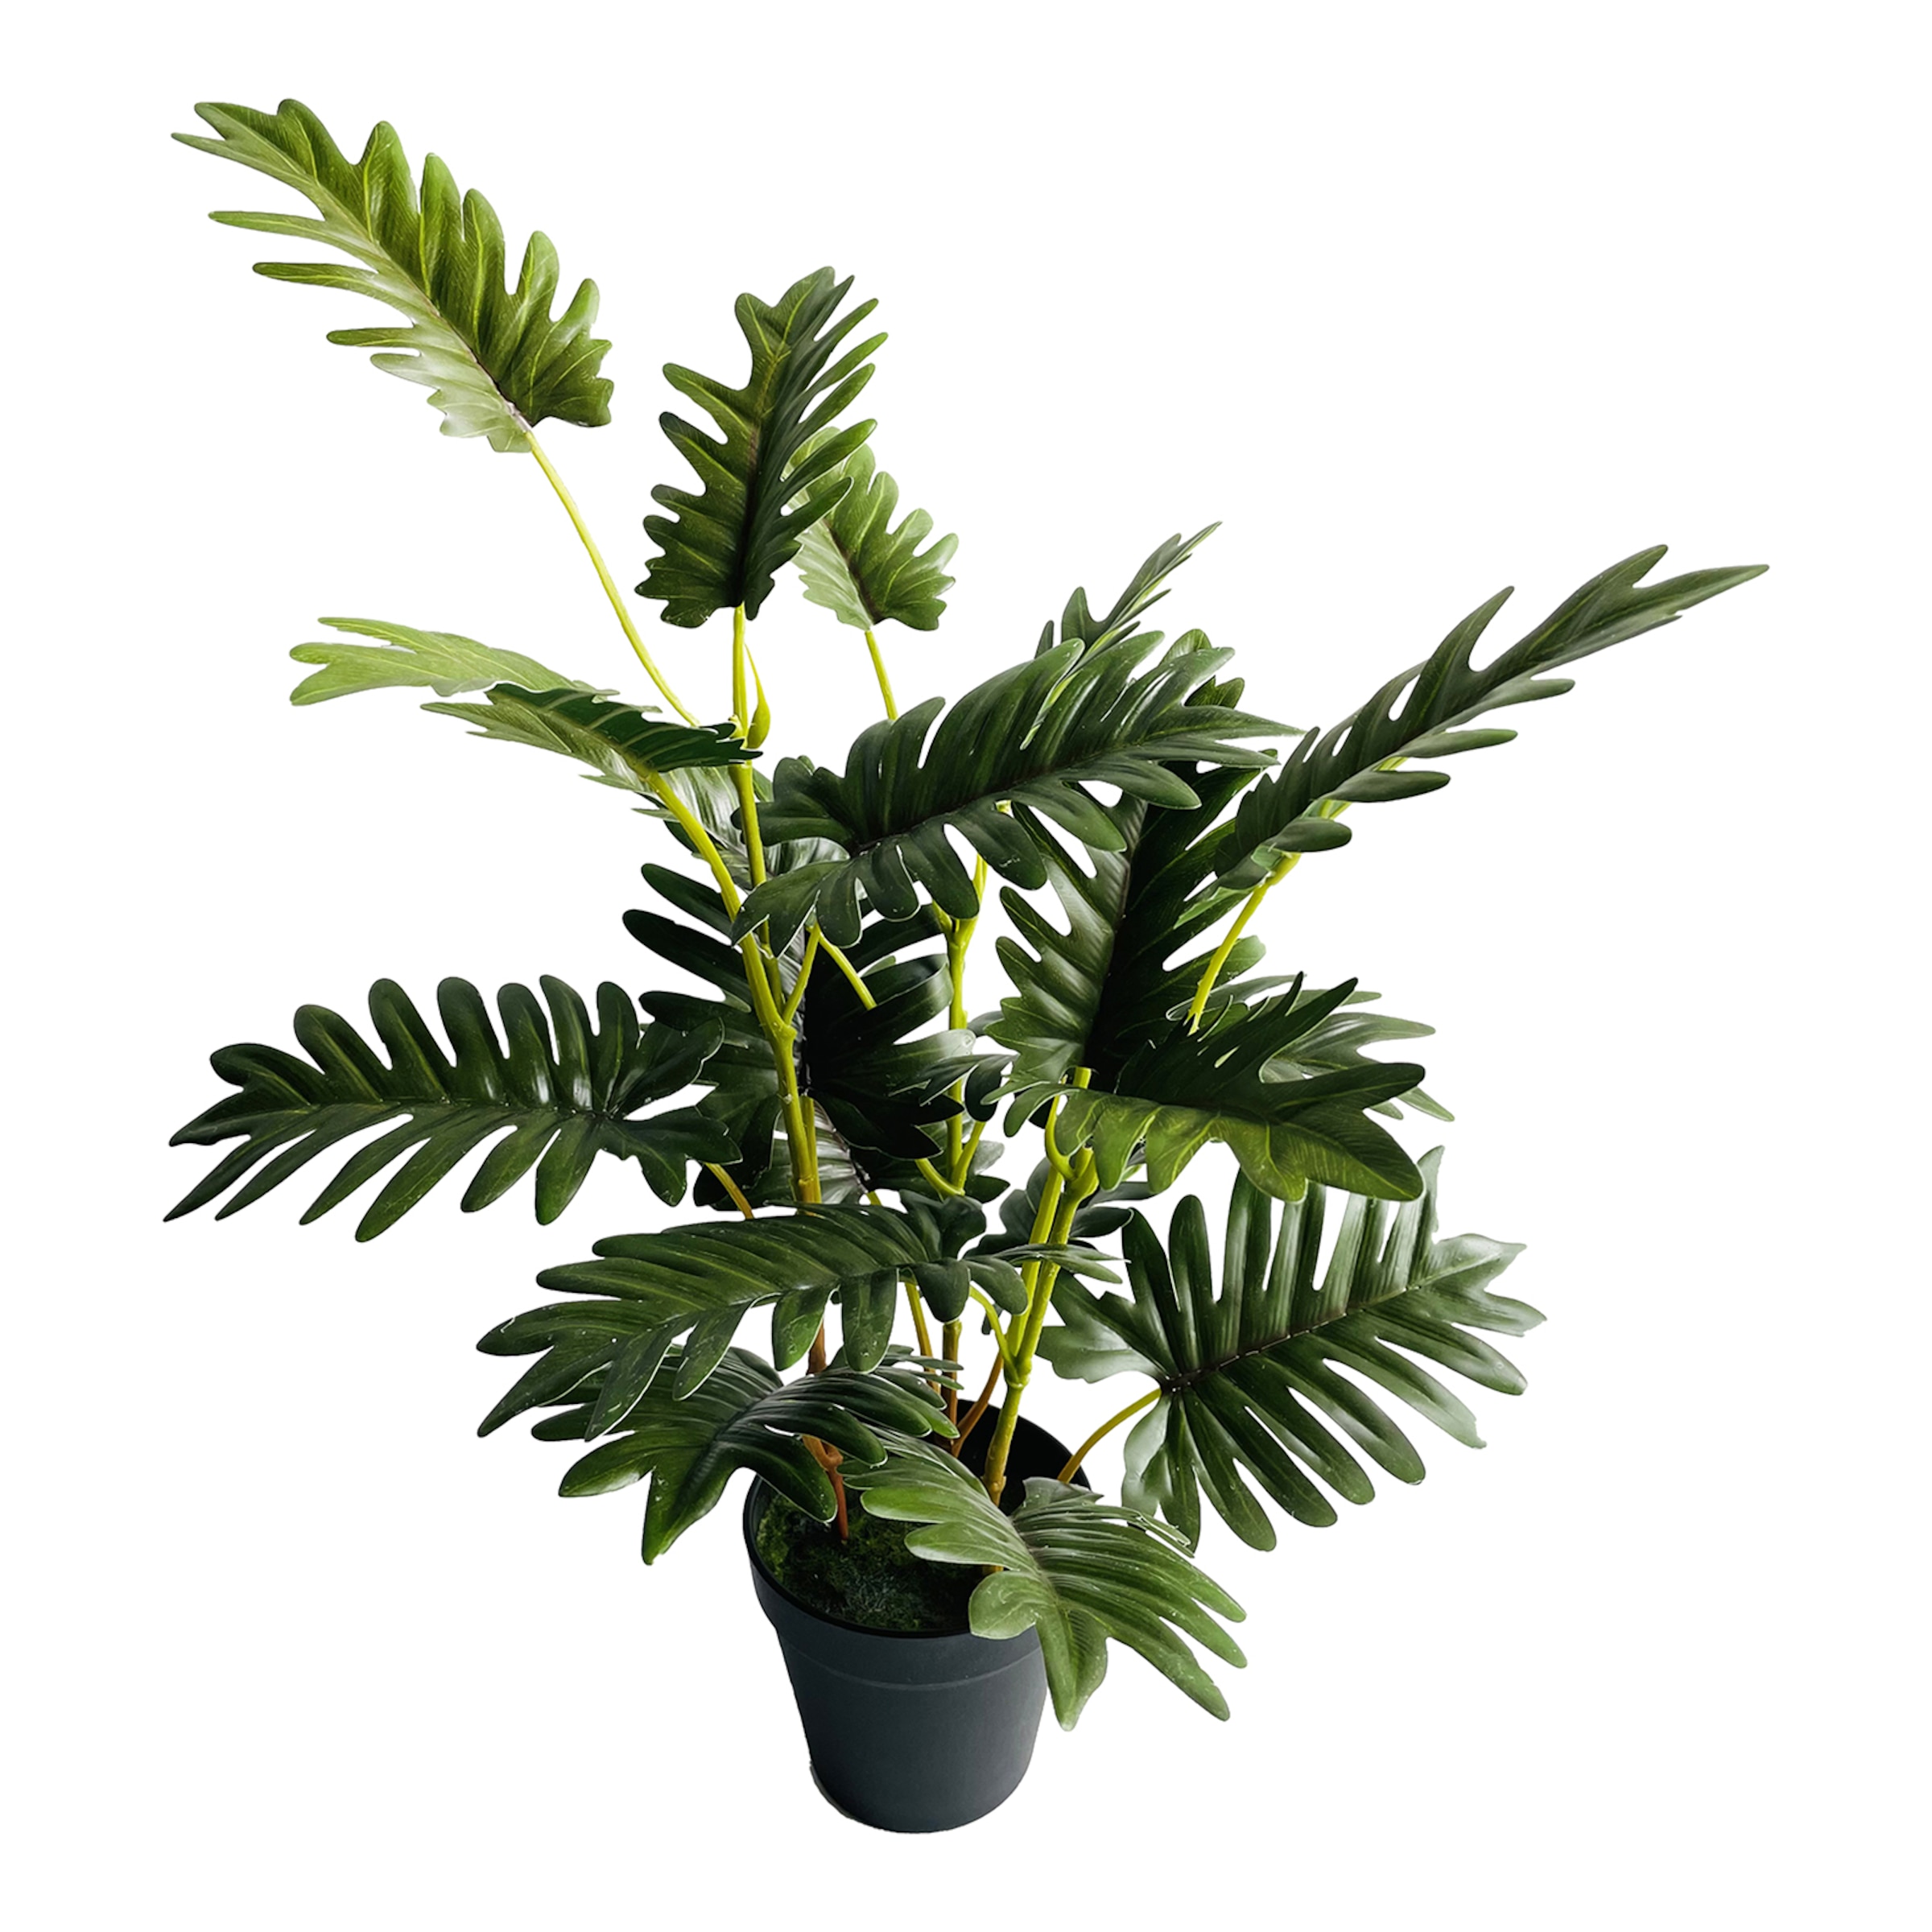 Philodendron artificiel, Plante verte artificielle